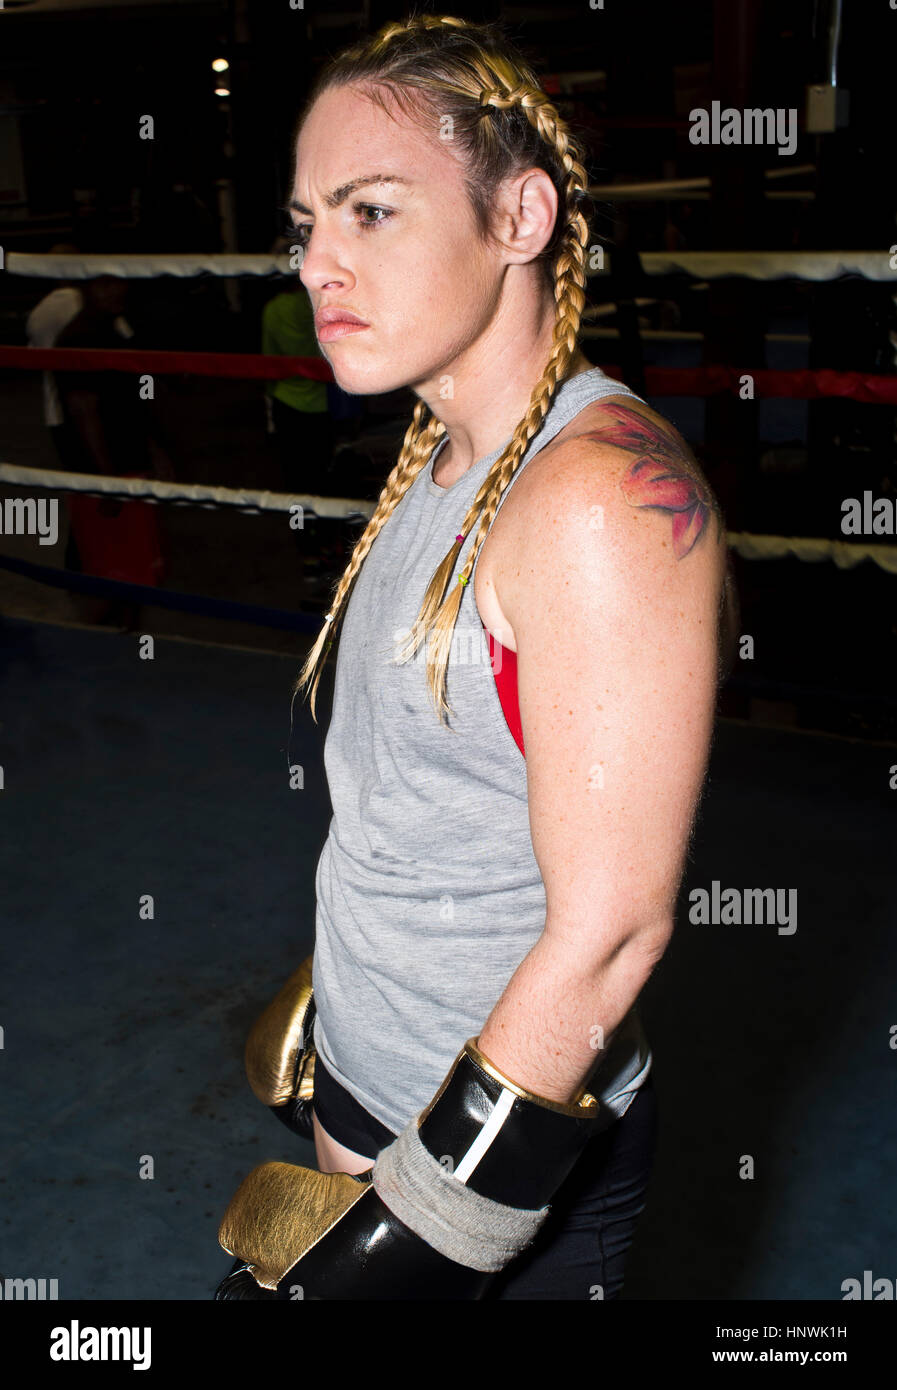 Aggressive female boxer in boxing ring Stock Photo